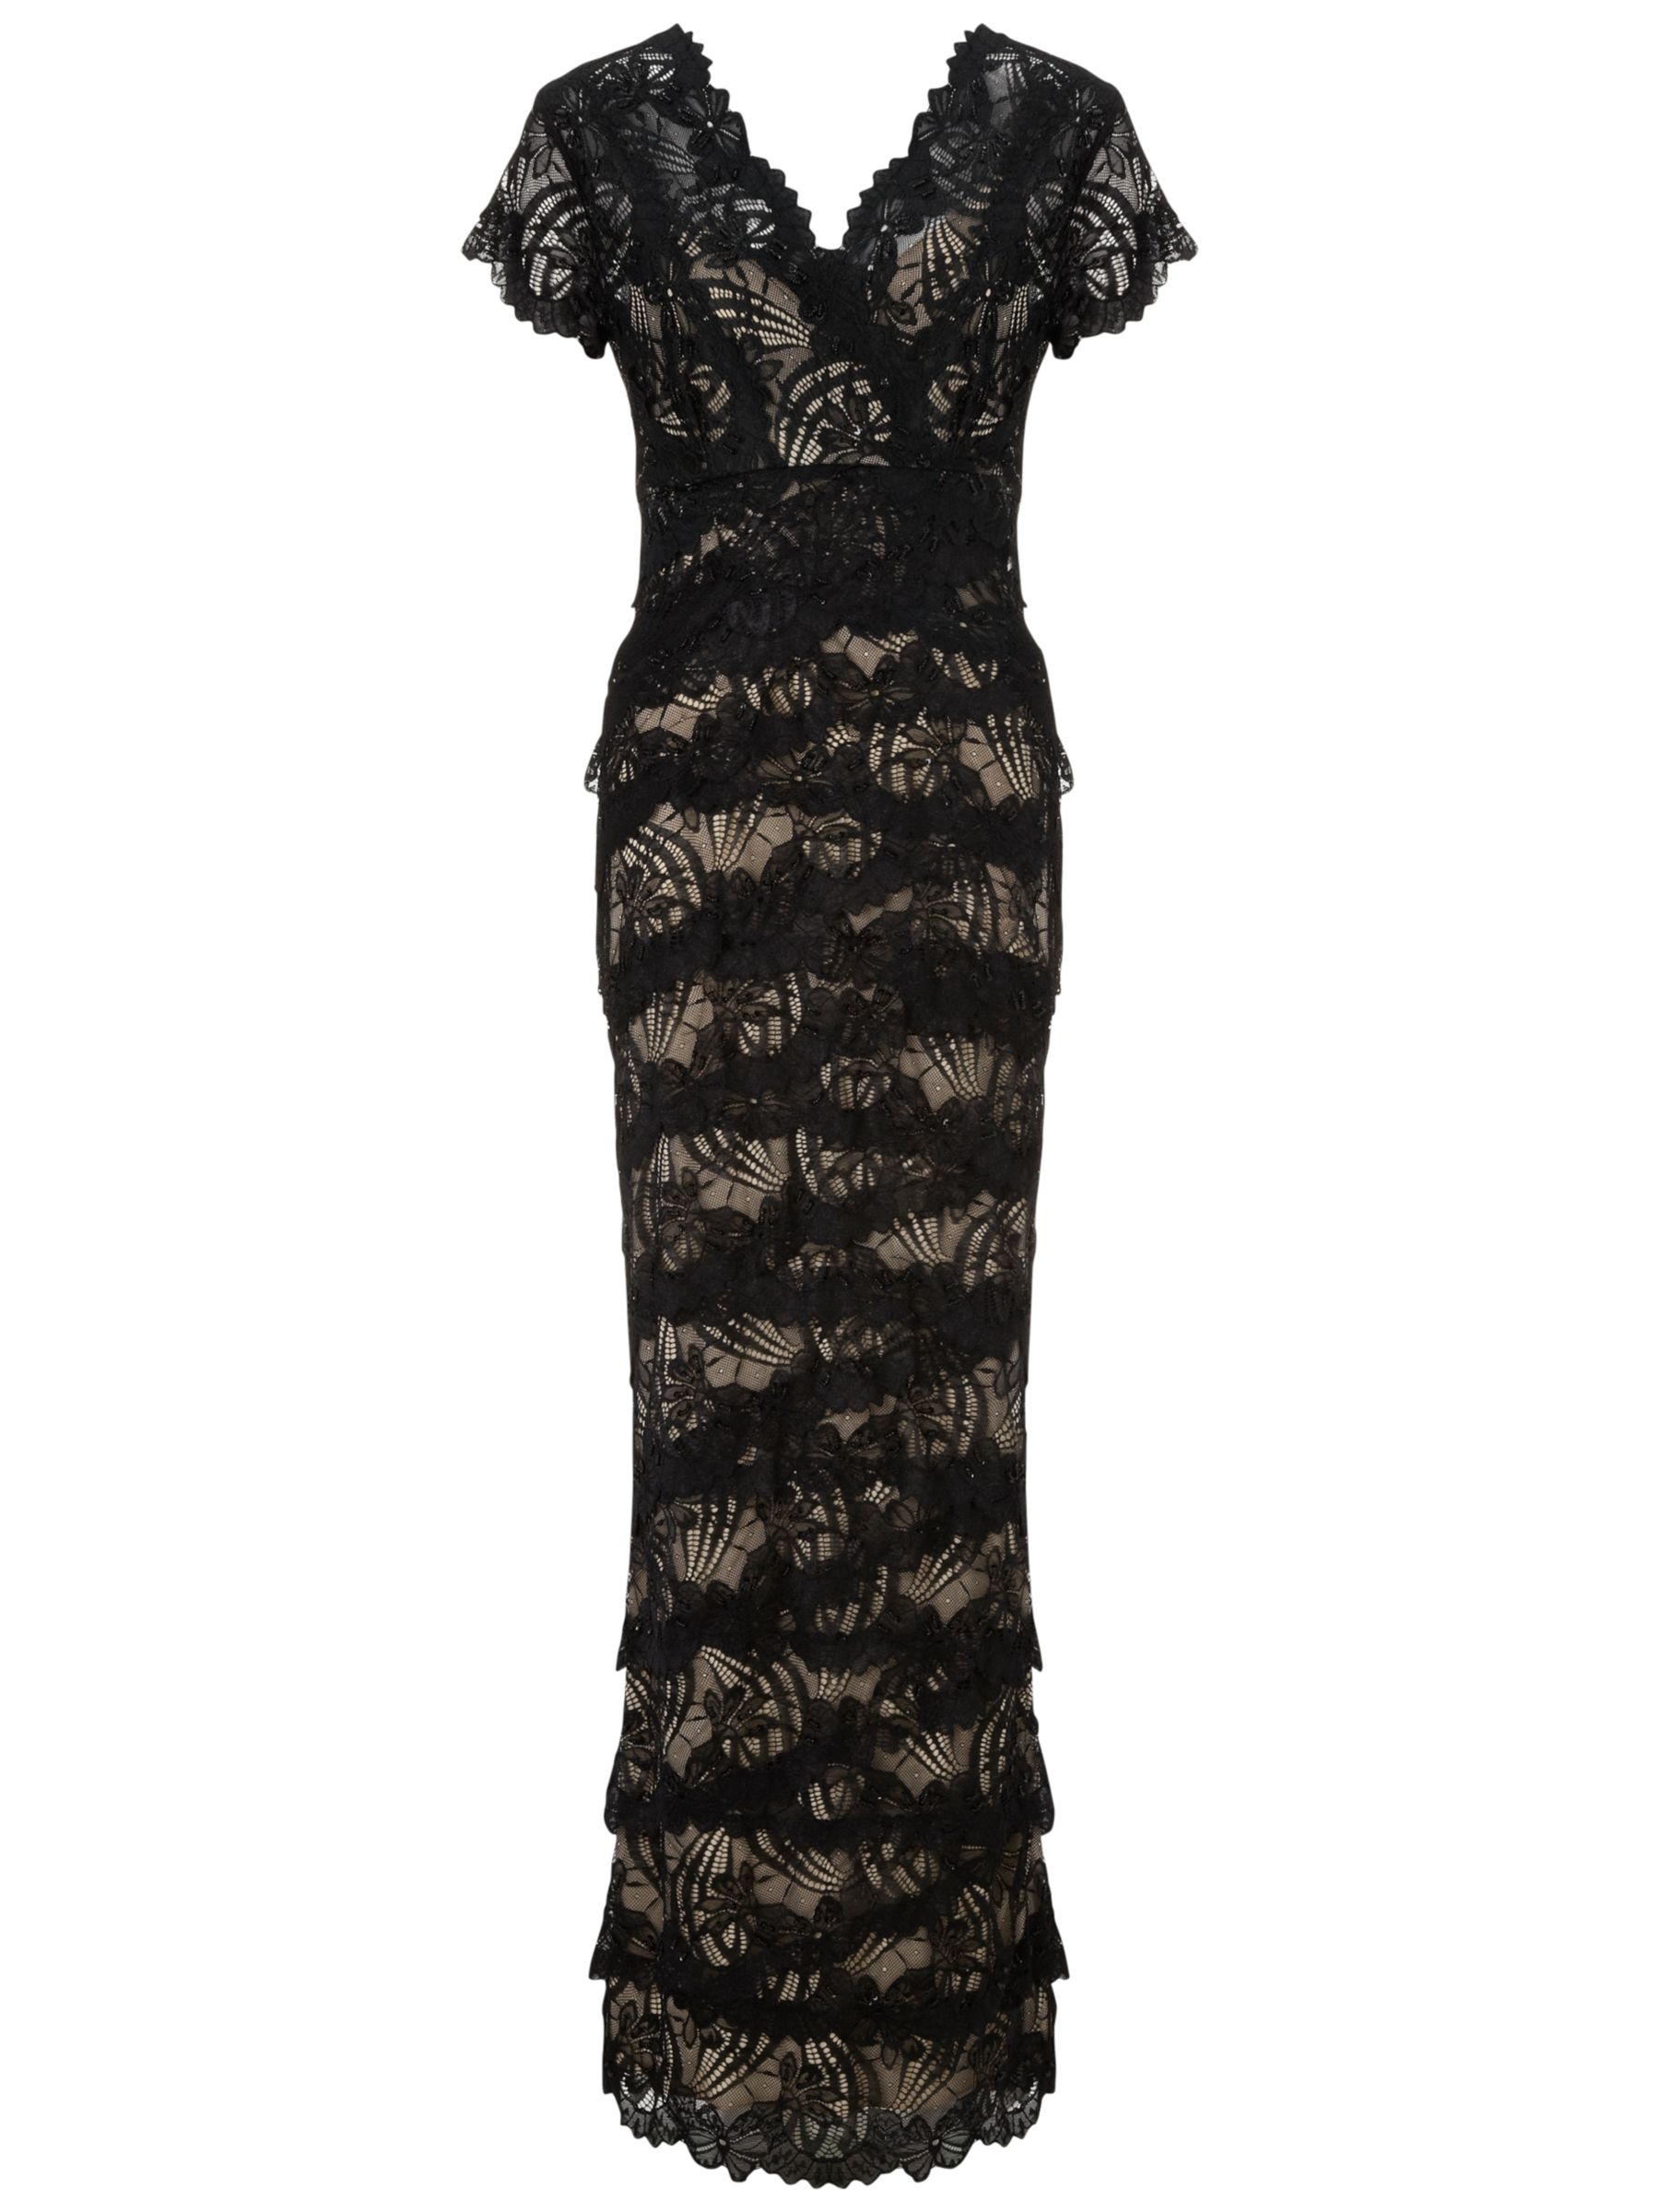 Gina Bacconi Long Beaded Lace Dress, Black/Beige